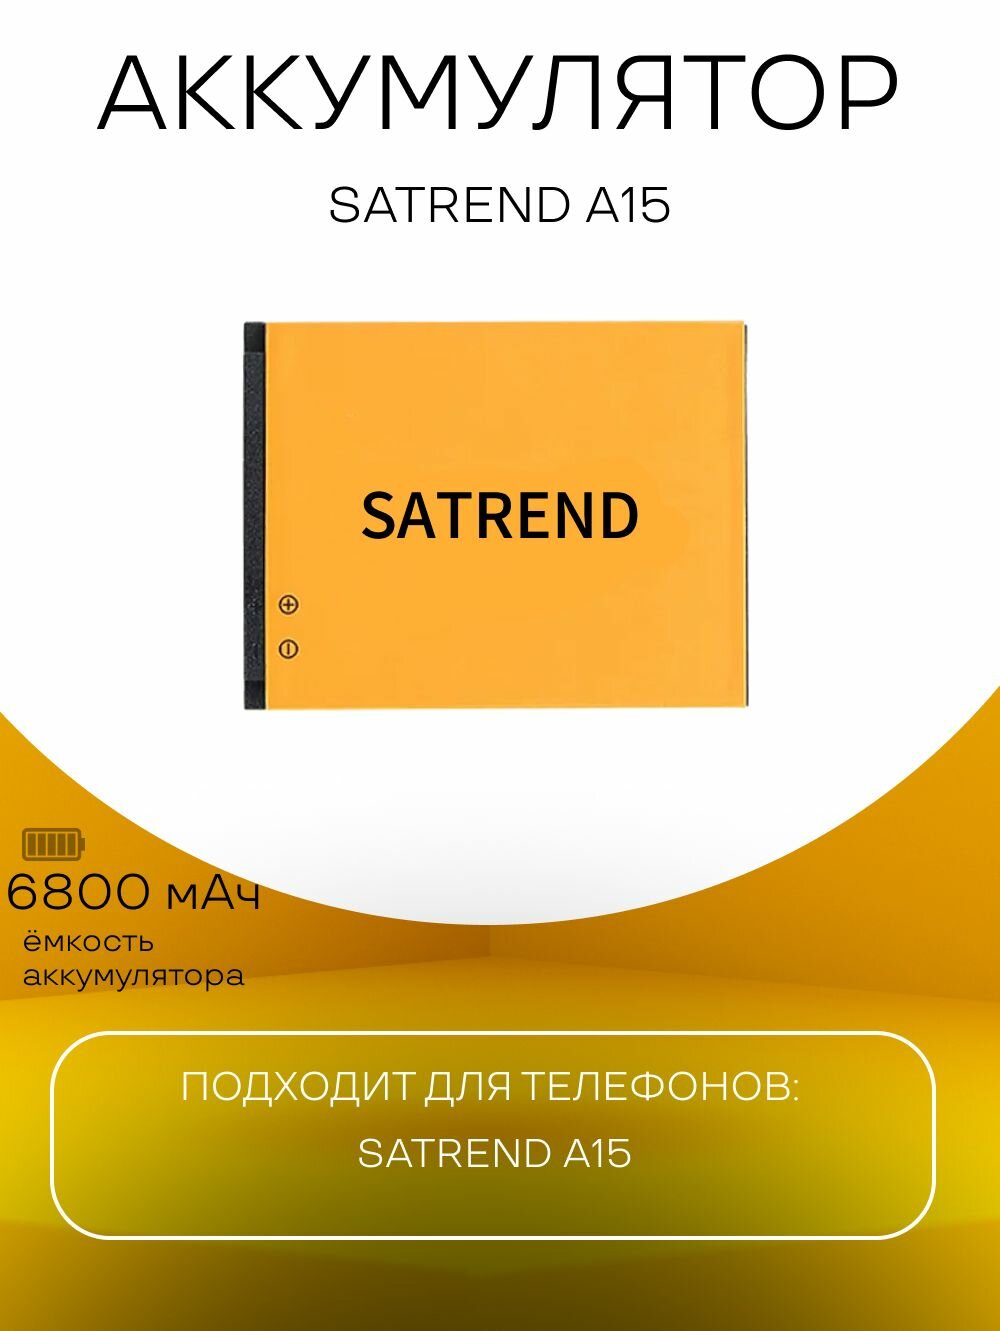 Аккумулятор Satrend A15 батарея для телефонов